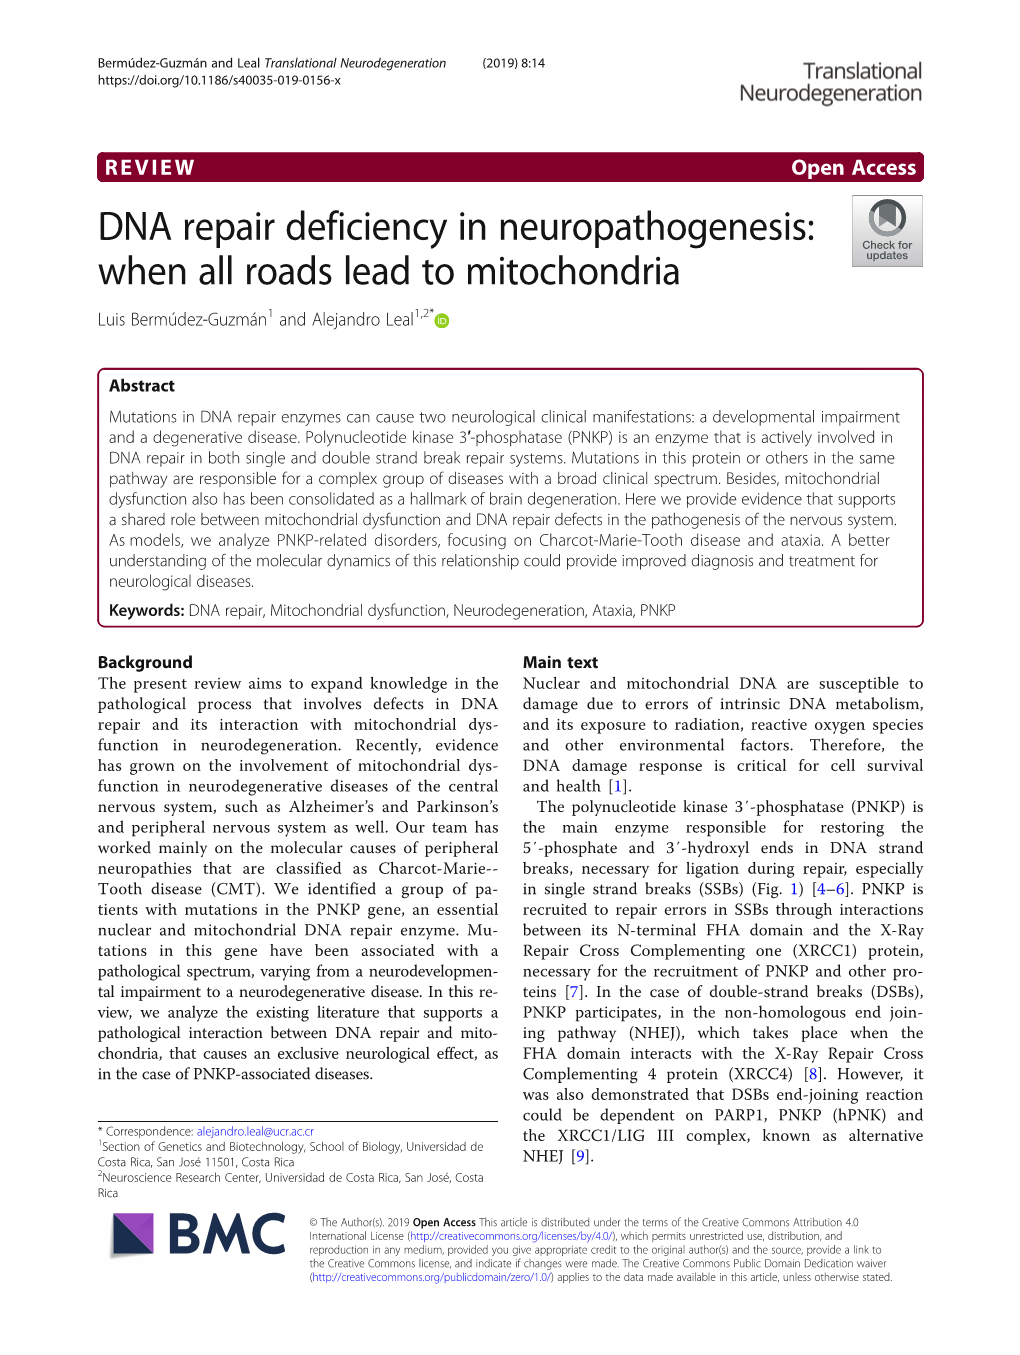 DNA Repair Deficiency in Neuropathogenesis: When All Roads Lead to Mitochondria Luis Bermúdez-Guzmán1 and Alejandro Leal1,2*